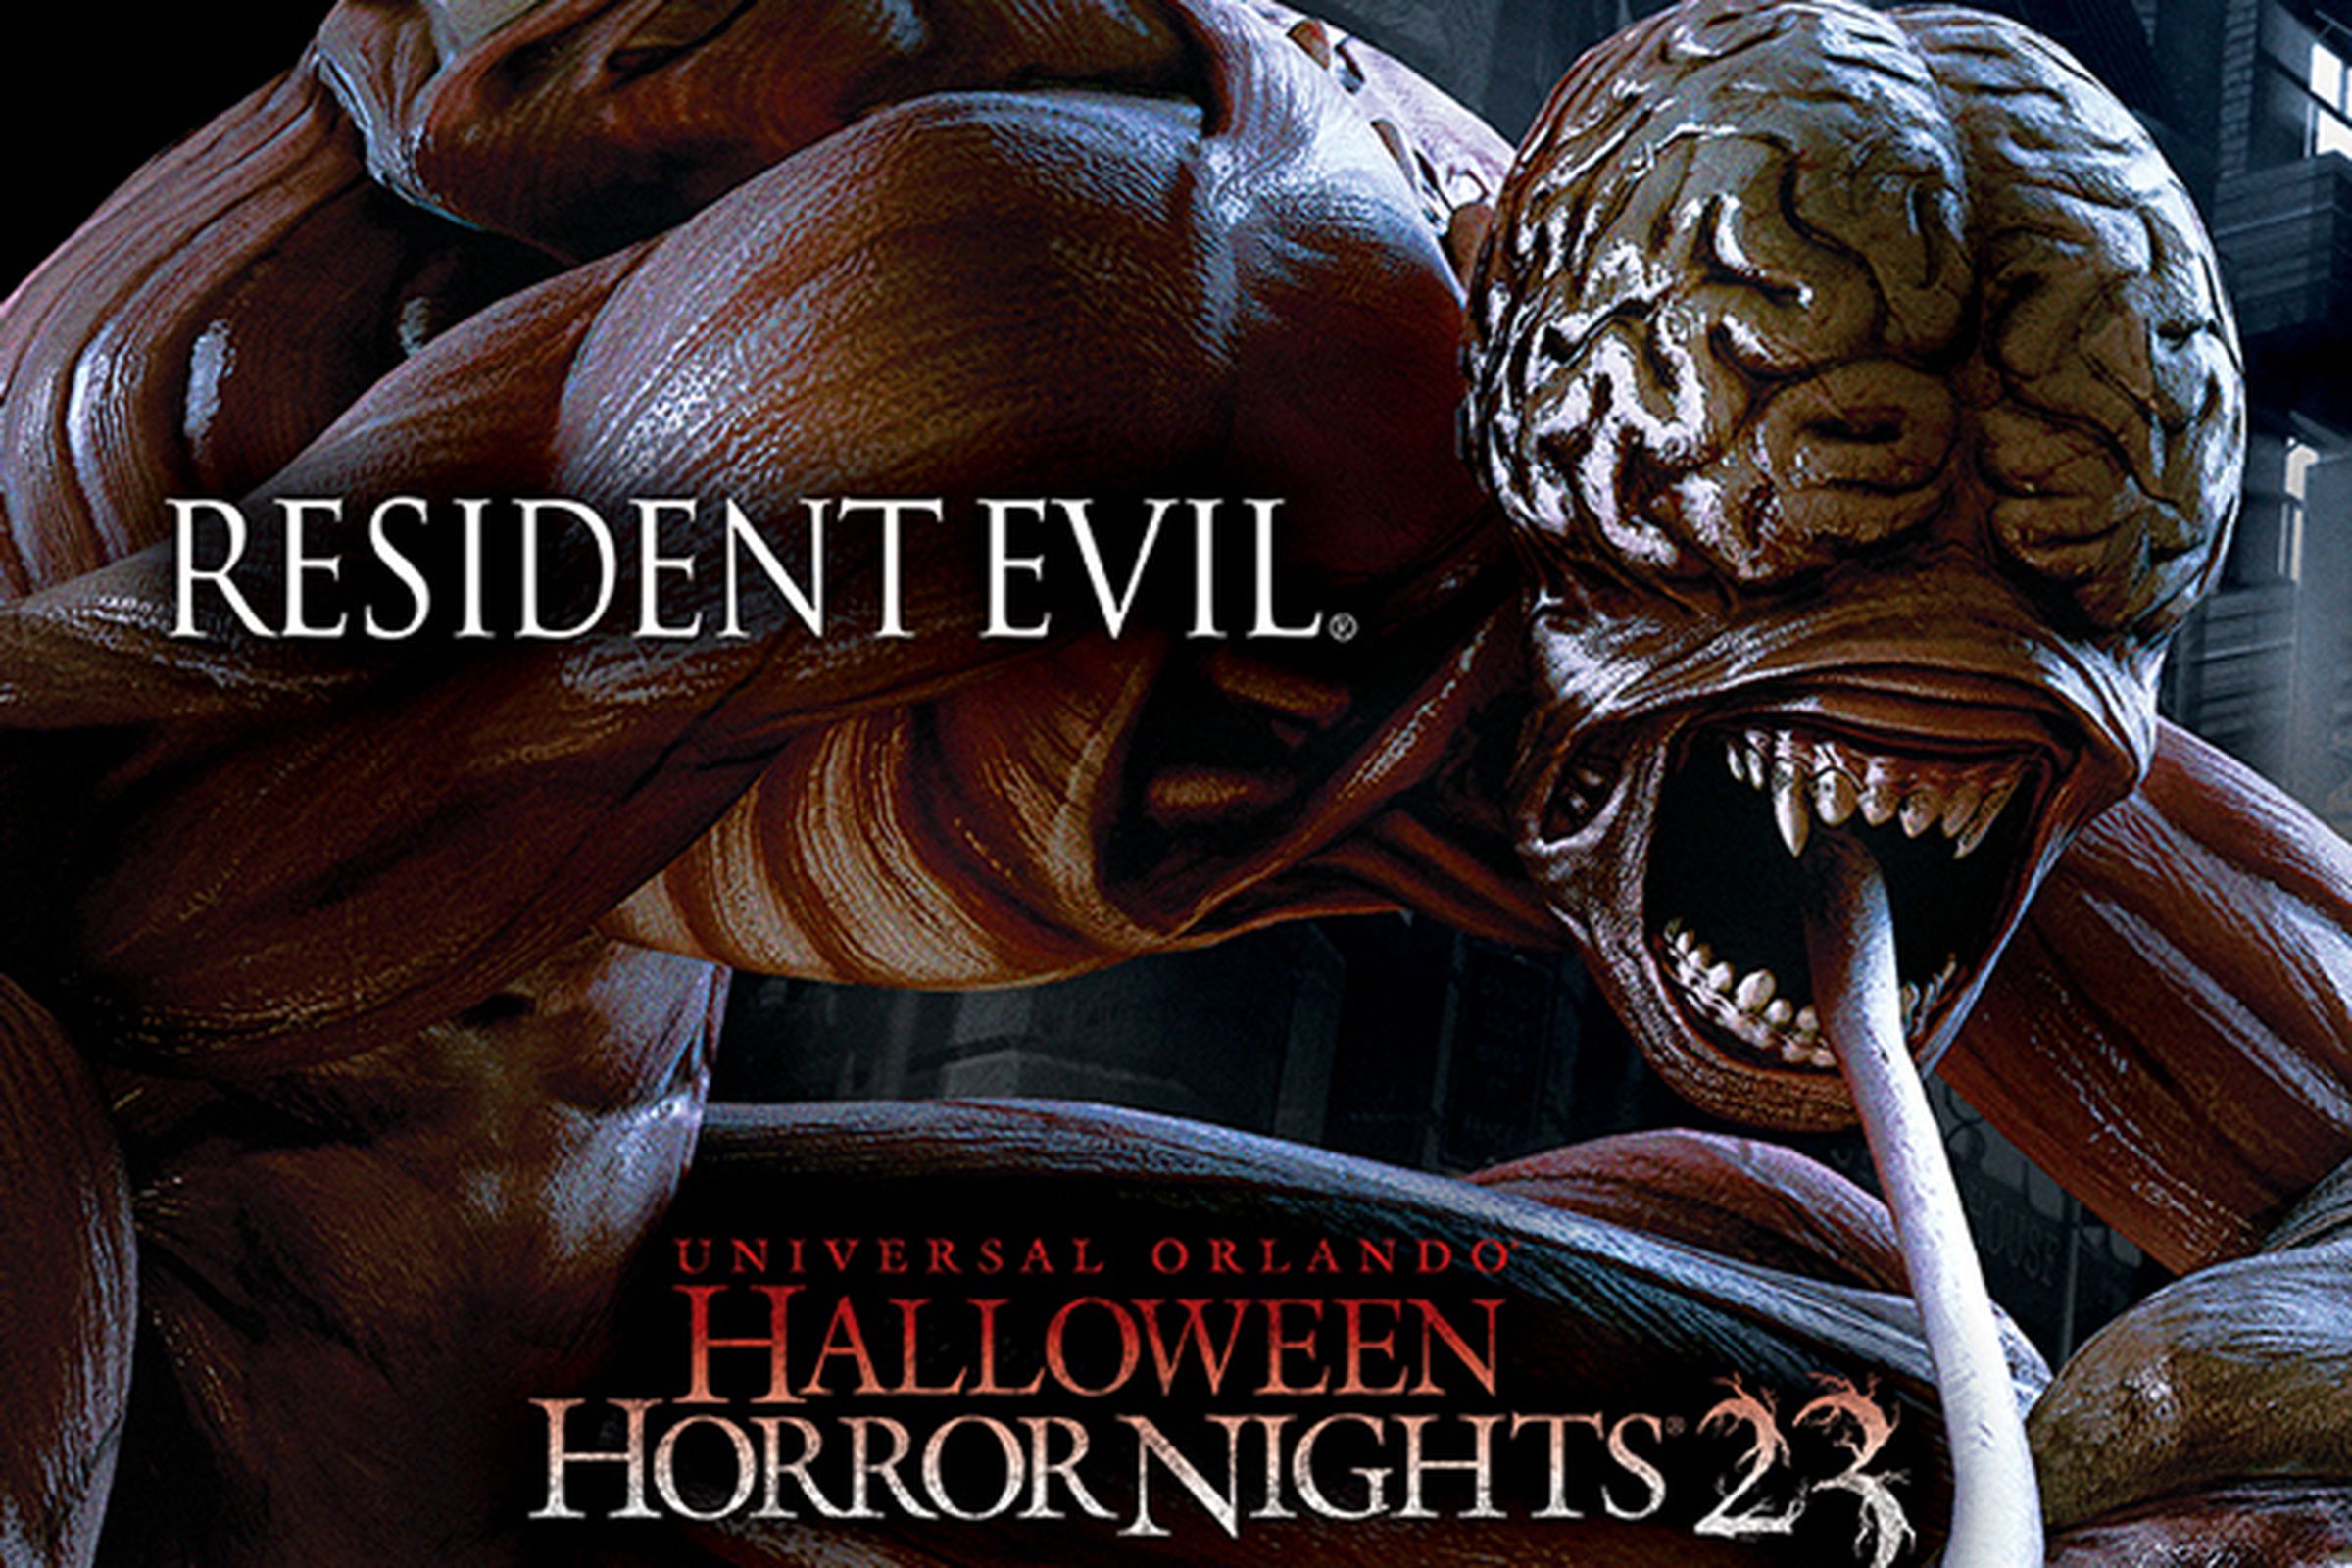 Resident Evil at Halloween Horror Nights